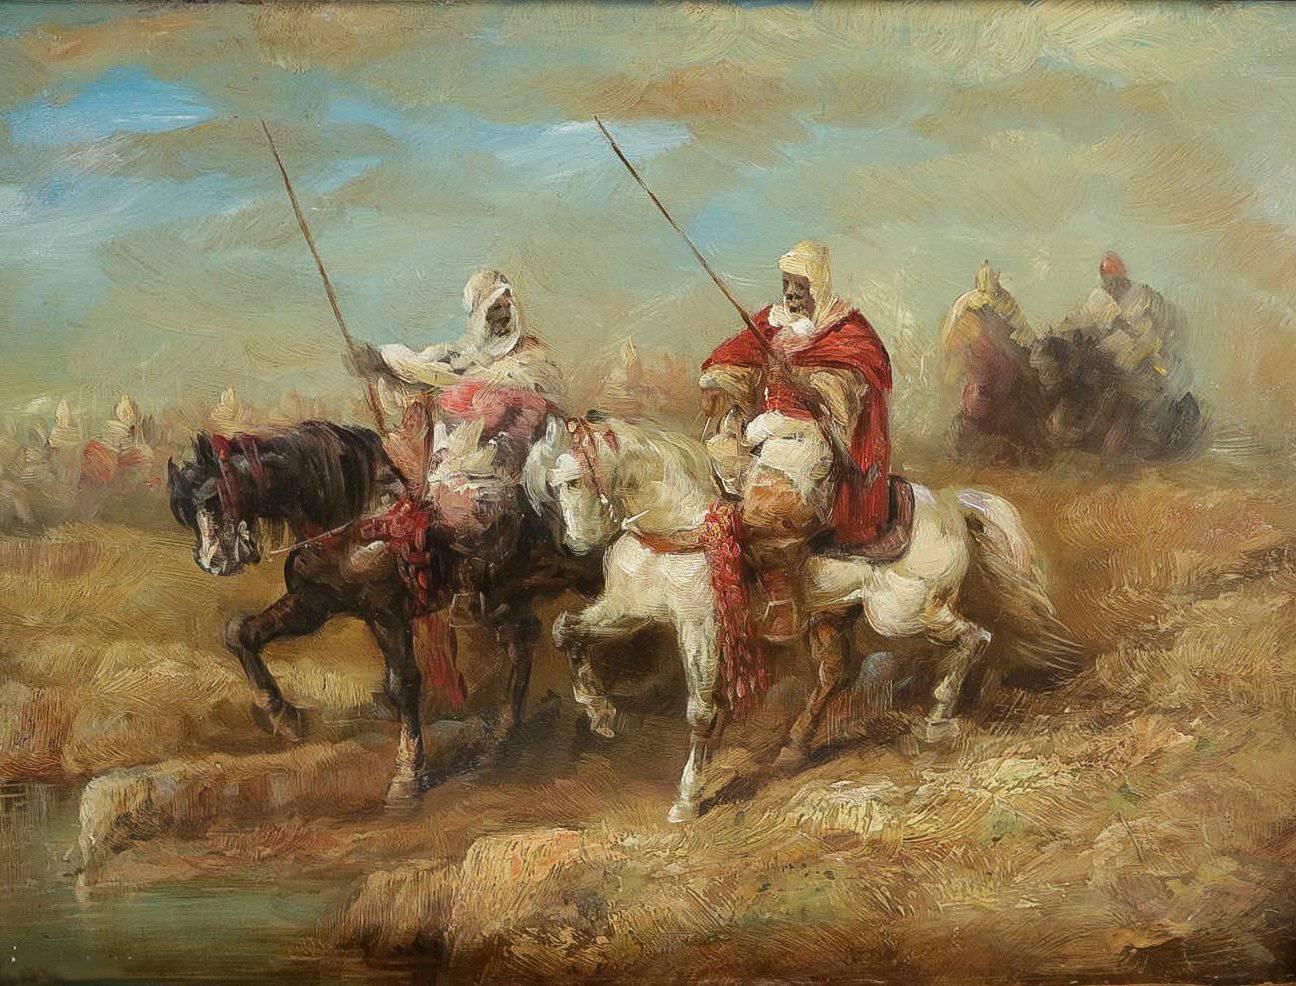 German Arabian Riders Horseback, Oil on Panel, circa 1856-1861